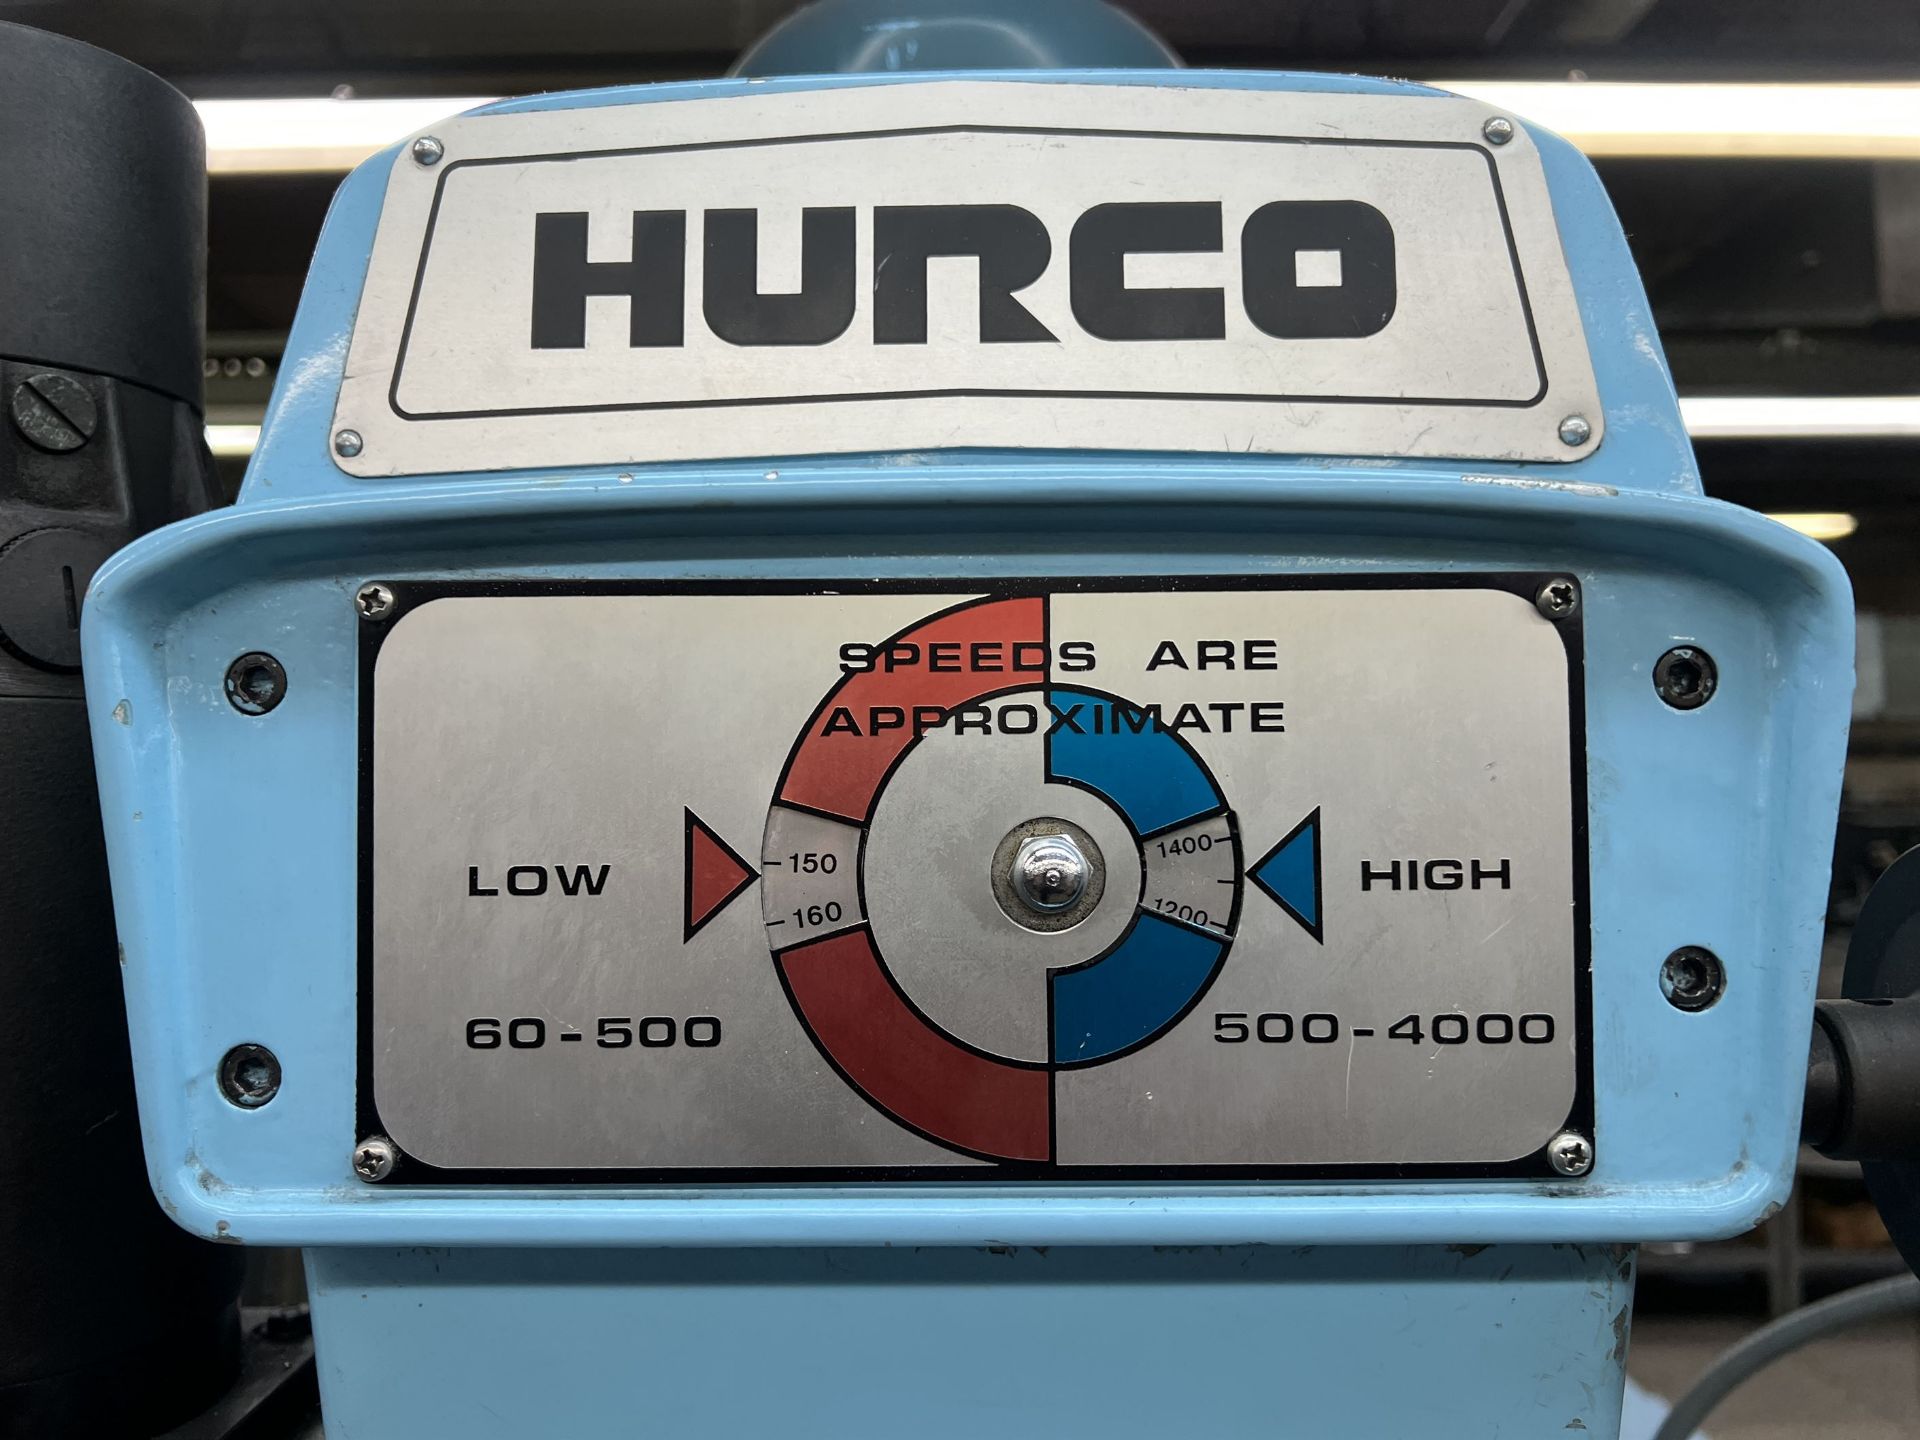 HURCO KM-3 CNC Vertical Milling Machine, s/n SDD-9003102A, HURCO Ultimax CNC Control, 11-3/4" x - Image 8 of 9